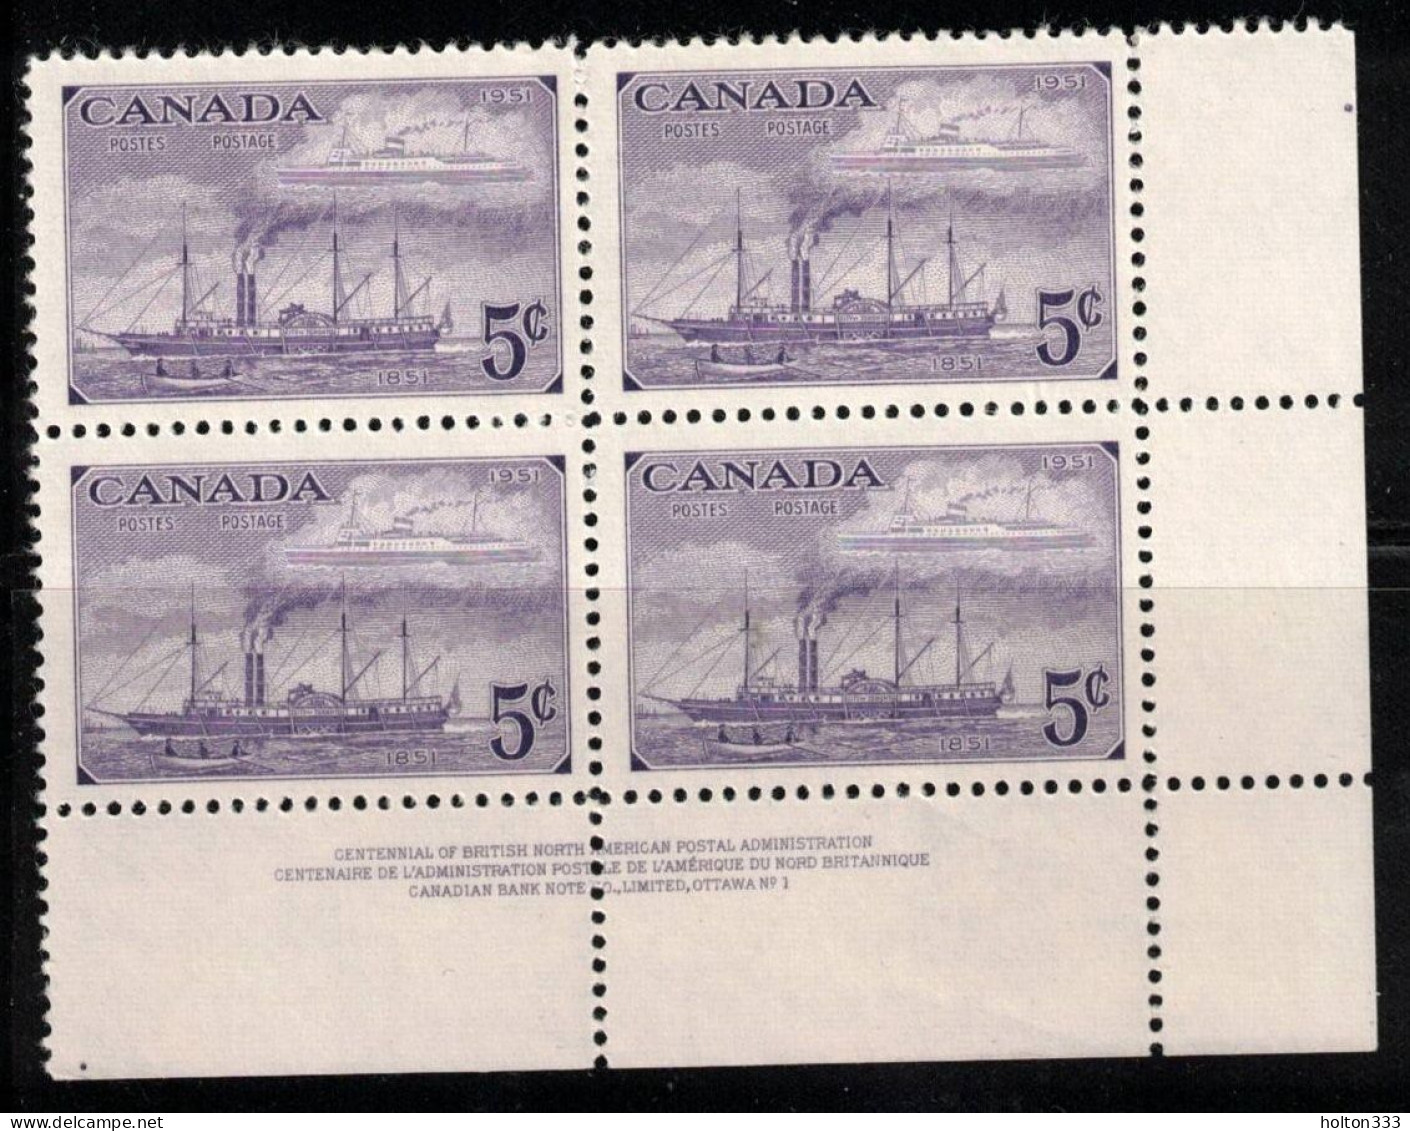 CANADA Scott # 312 MNH - Stamp Centennial LR Plate Block - Nuevos